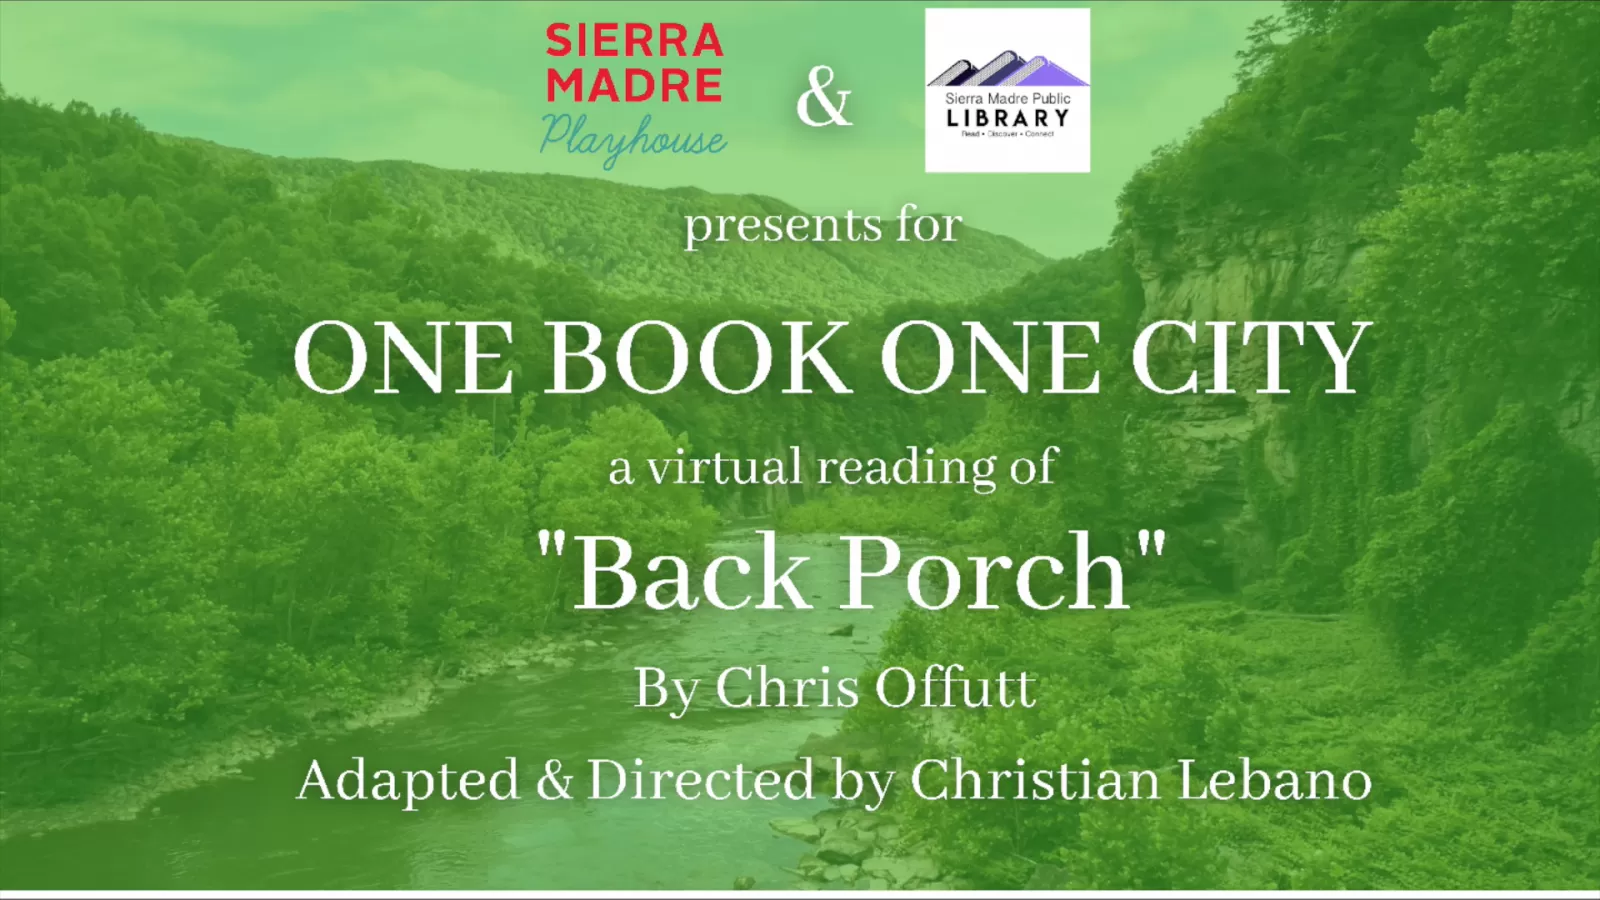 "Back Porch" by Chris Offutt